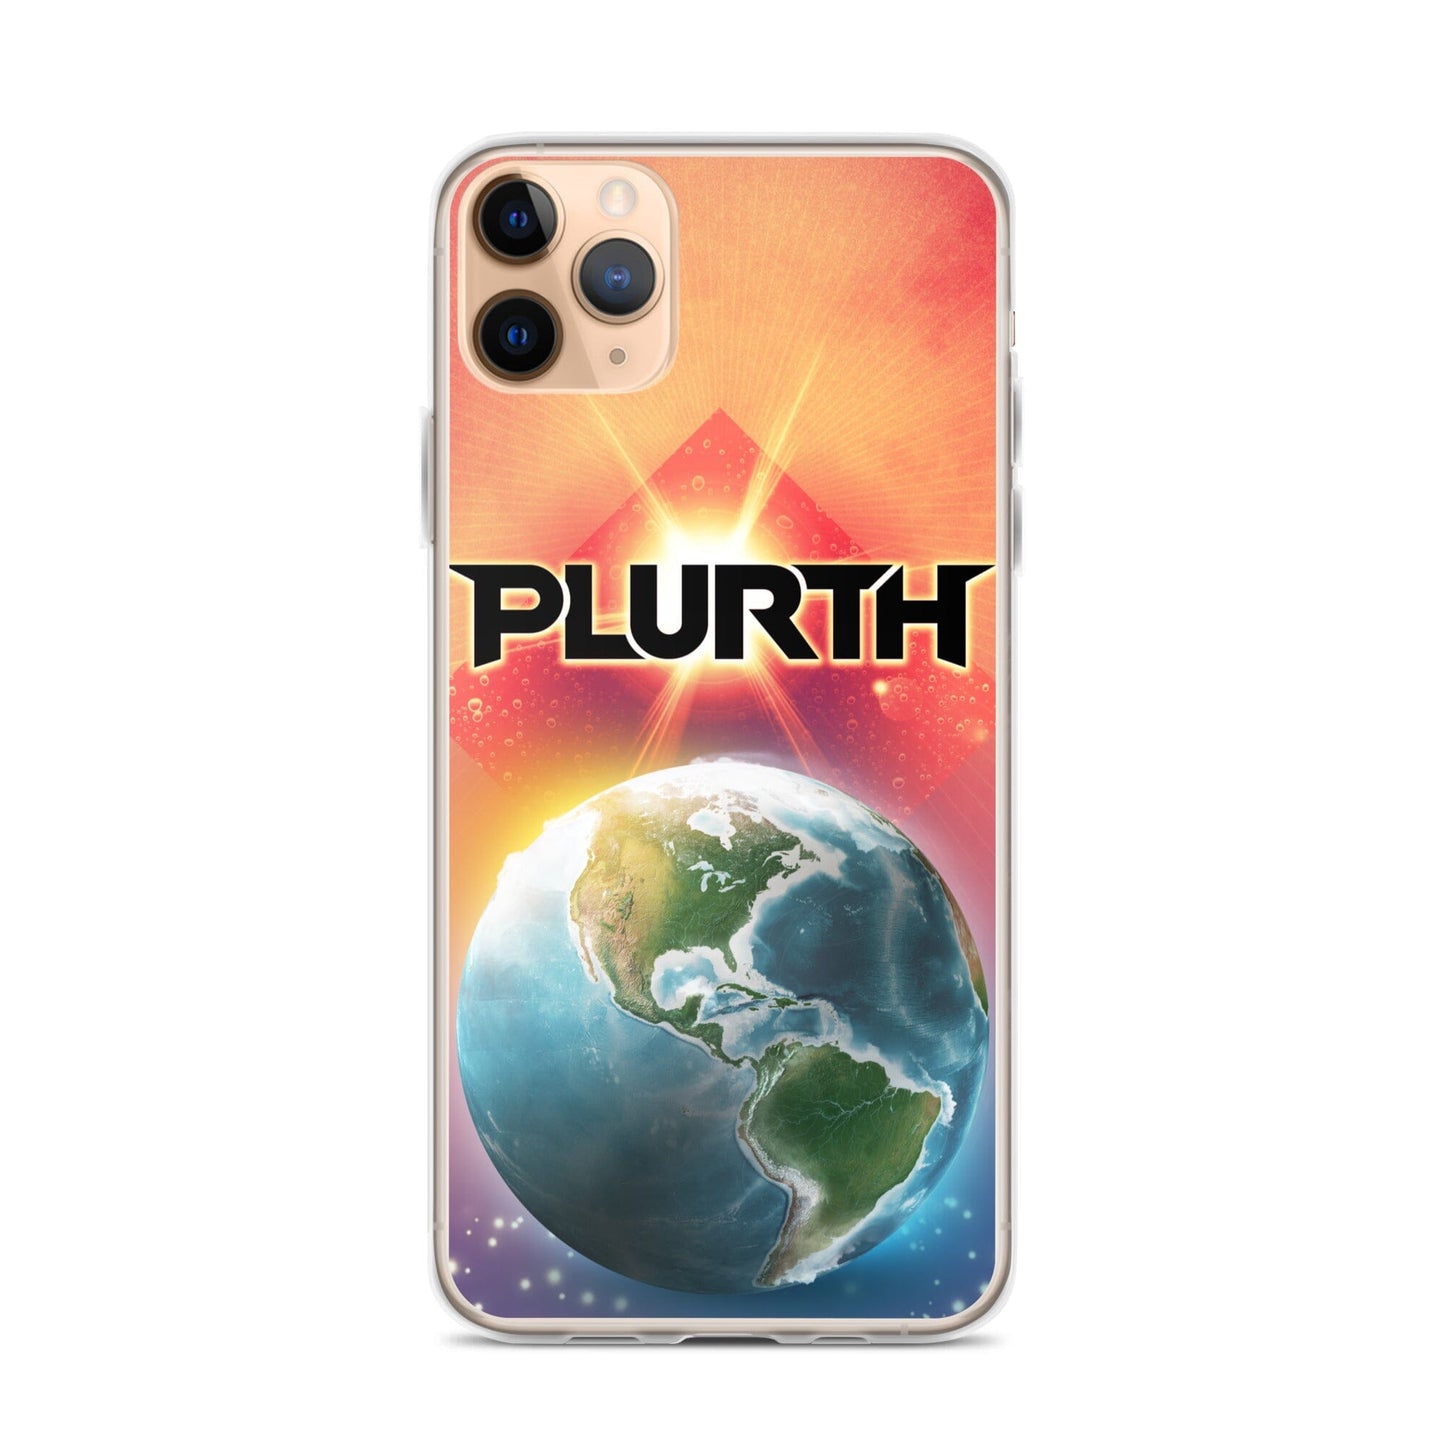 PLURTH iPhone Case PLURTHLINGS iPhone 11 Pro Max 